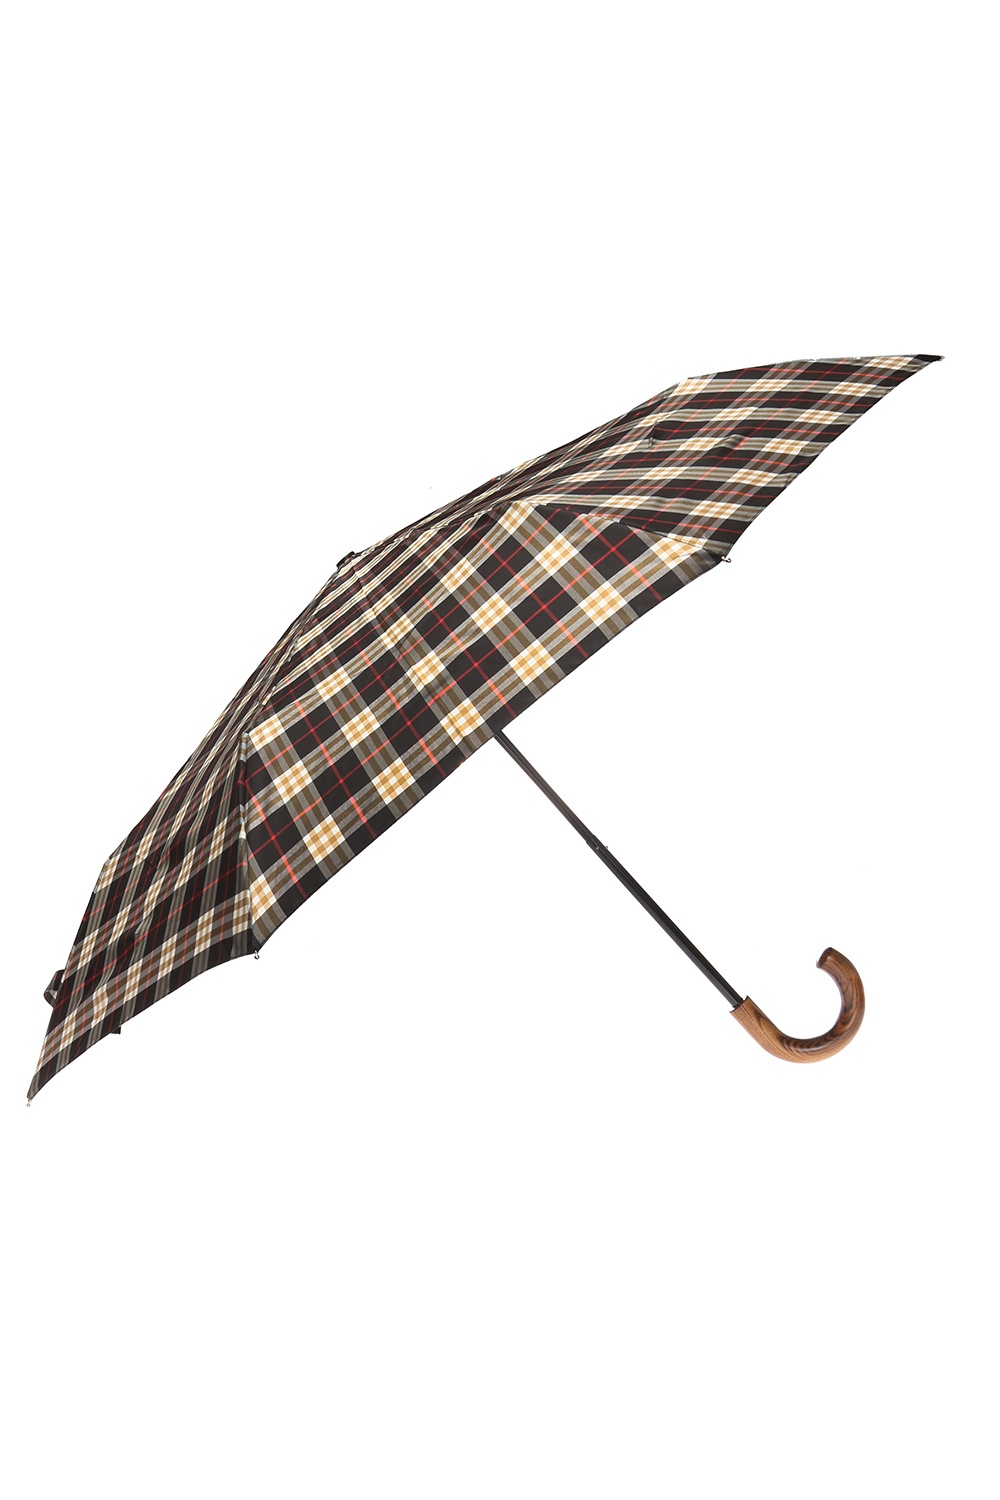 burberry folding umbrella